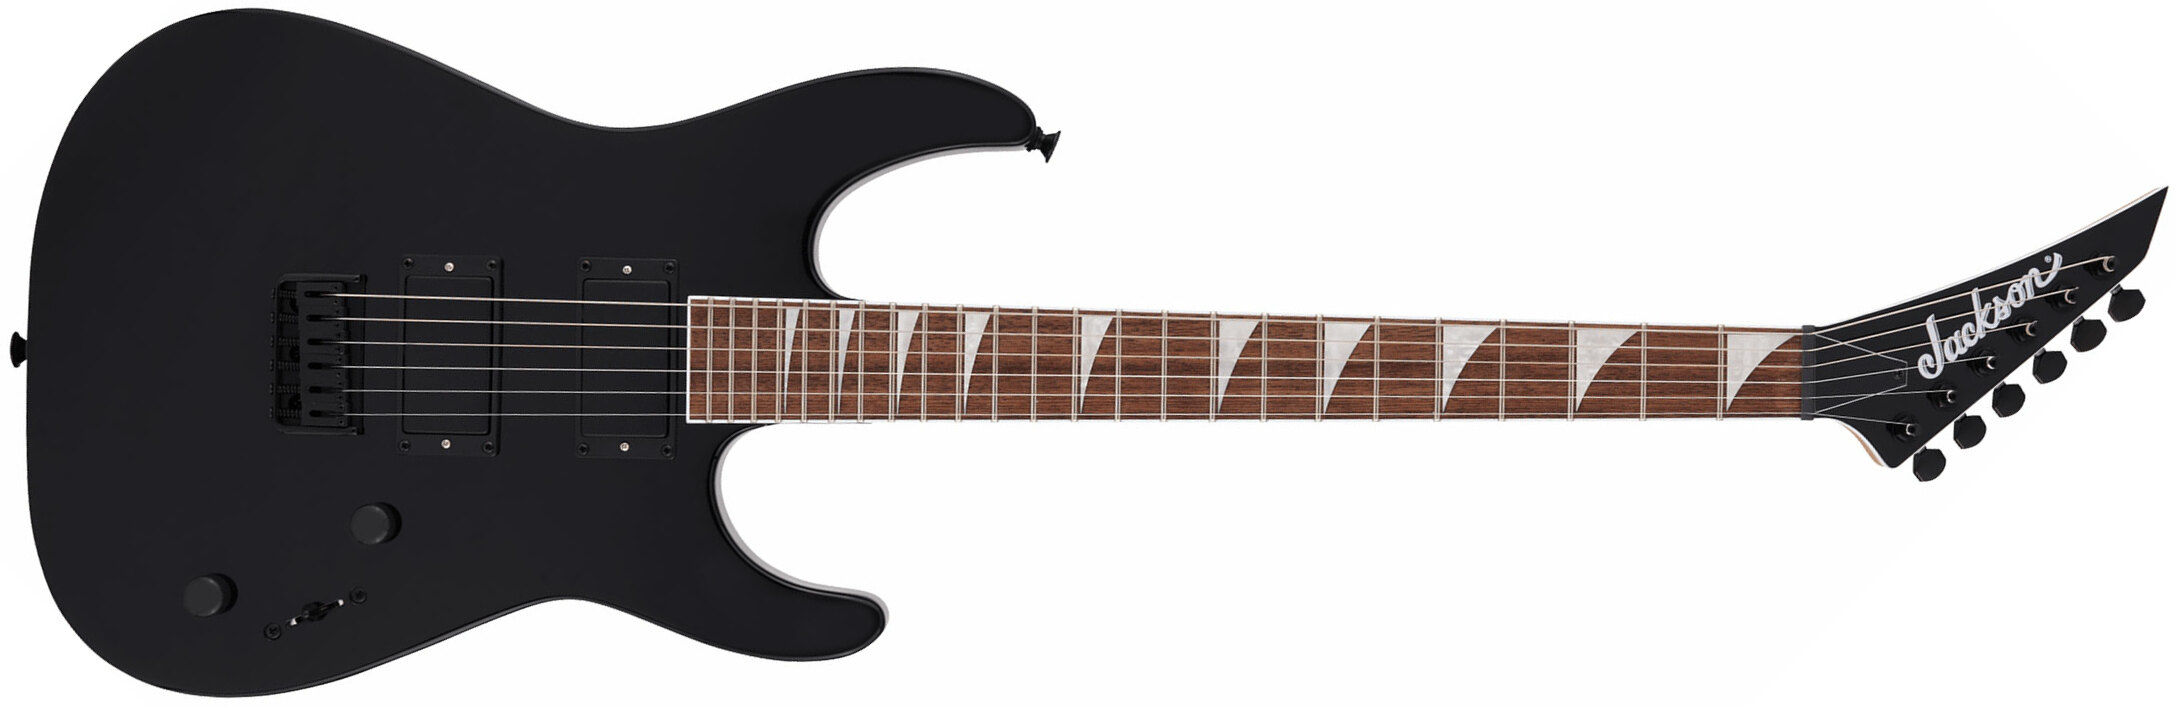 Jackson Dinky Dk2x 2h Ht Lau - Gloss Black - Str shape electric guitar - Main picture